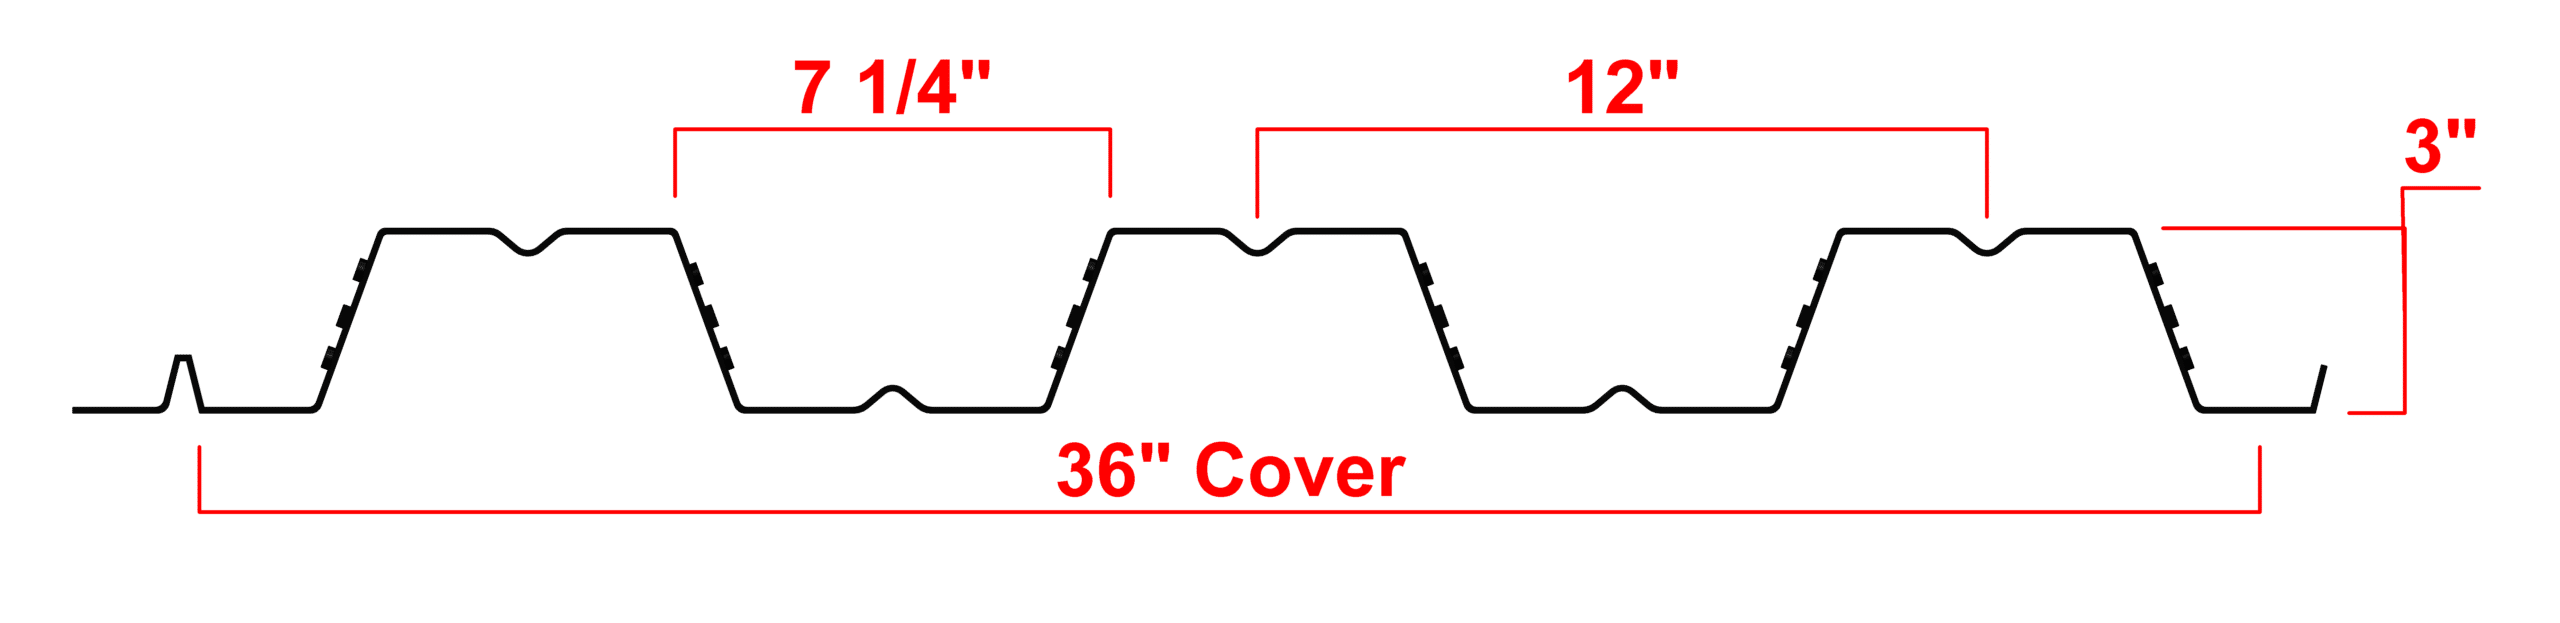 3.0 or 3VLI Composite Deck Profile